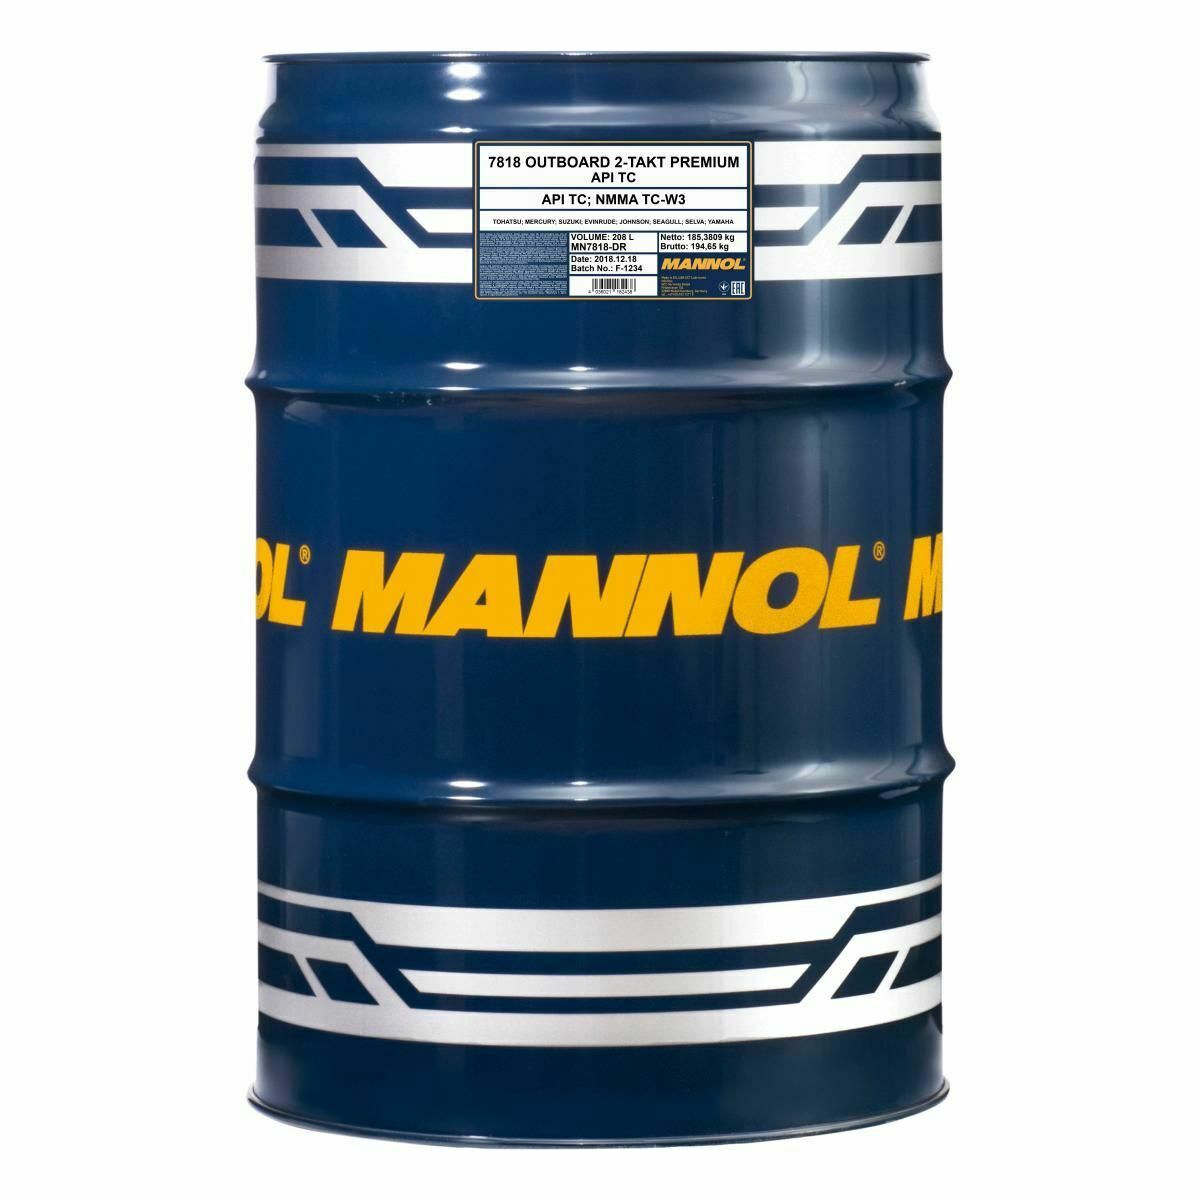 208 Liter MANNOL 7818 Outboard 2-Takt Premium API TD Motoröl 4032021102360